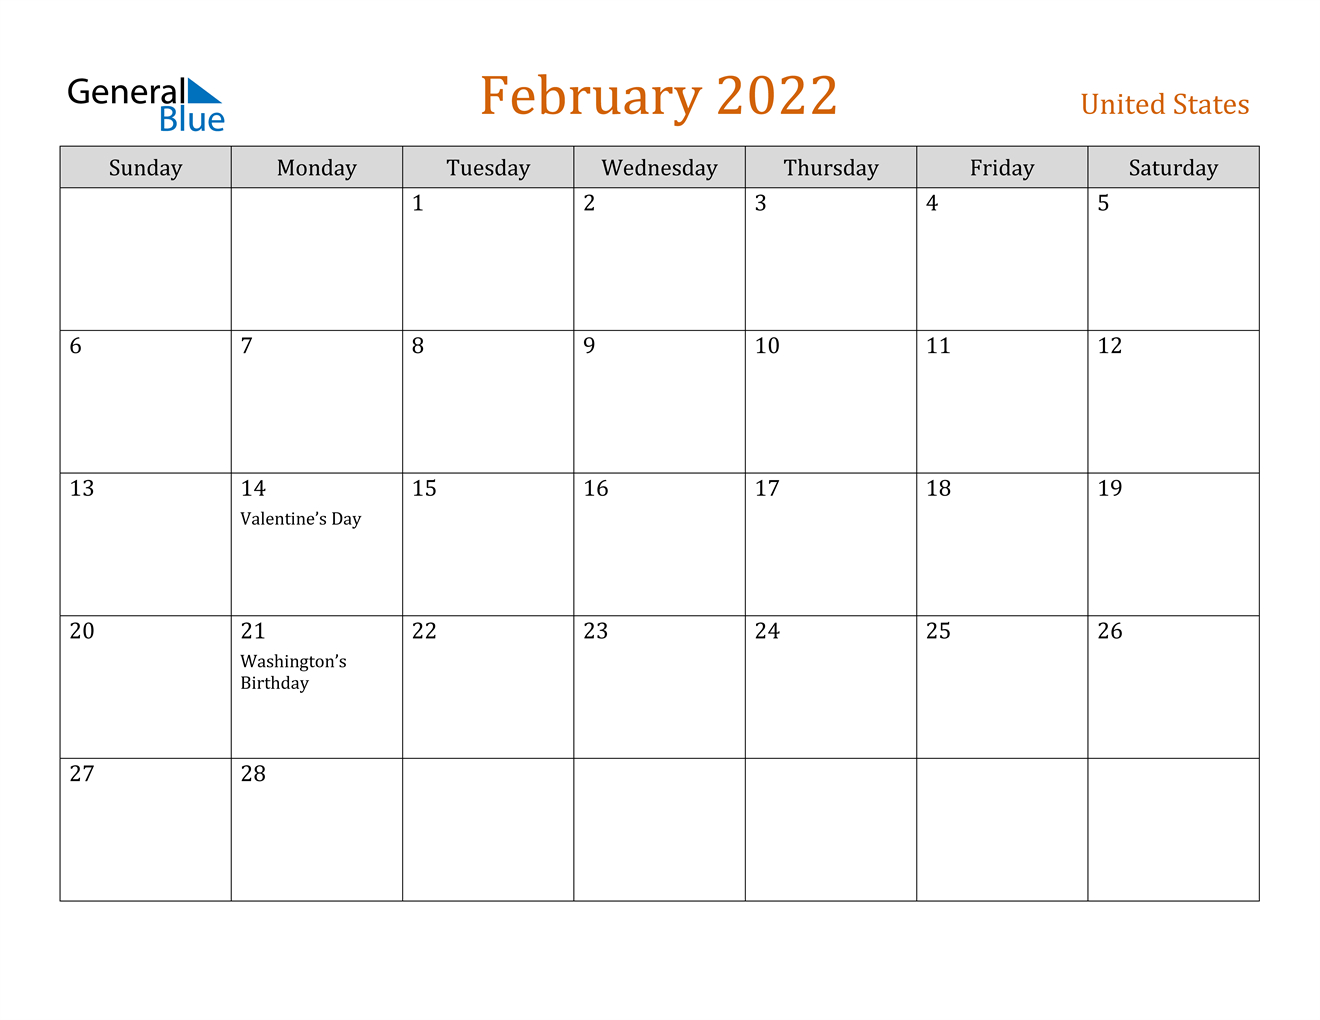 February 2022 Calendar - United States